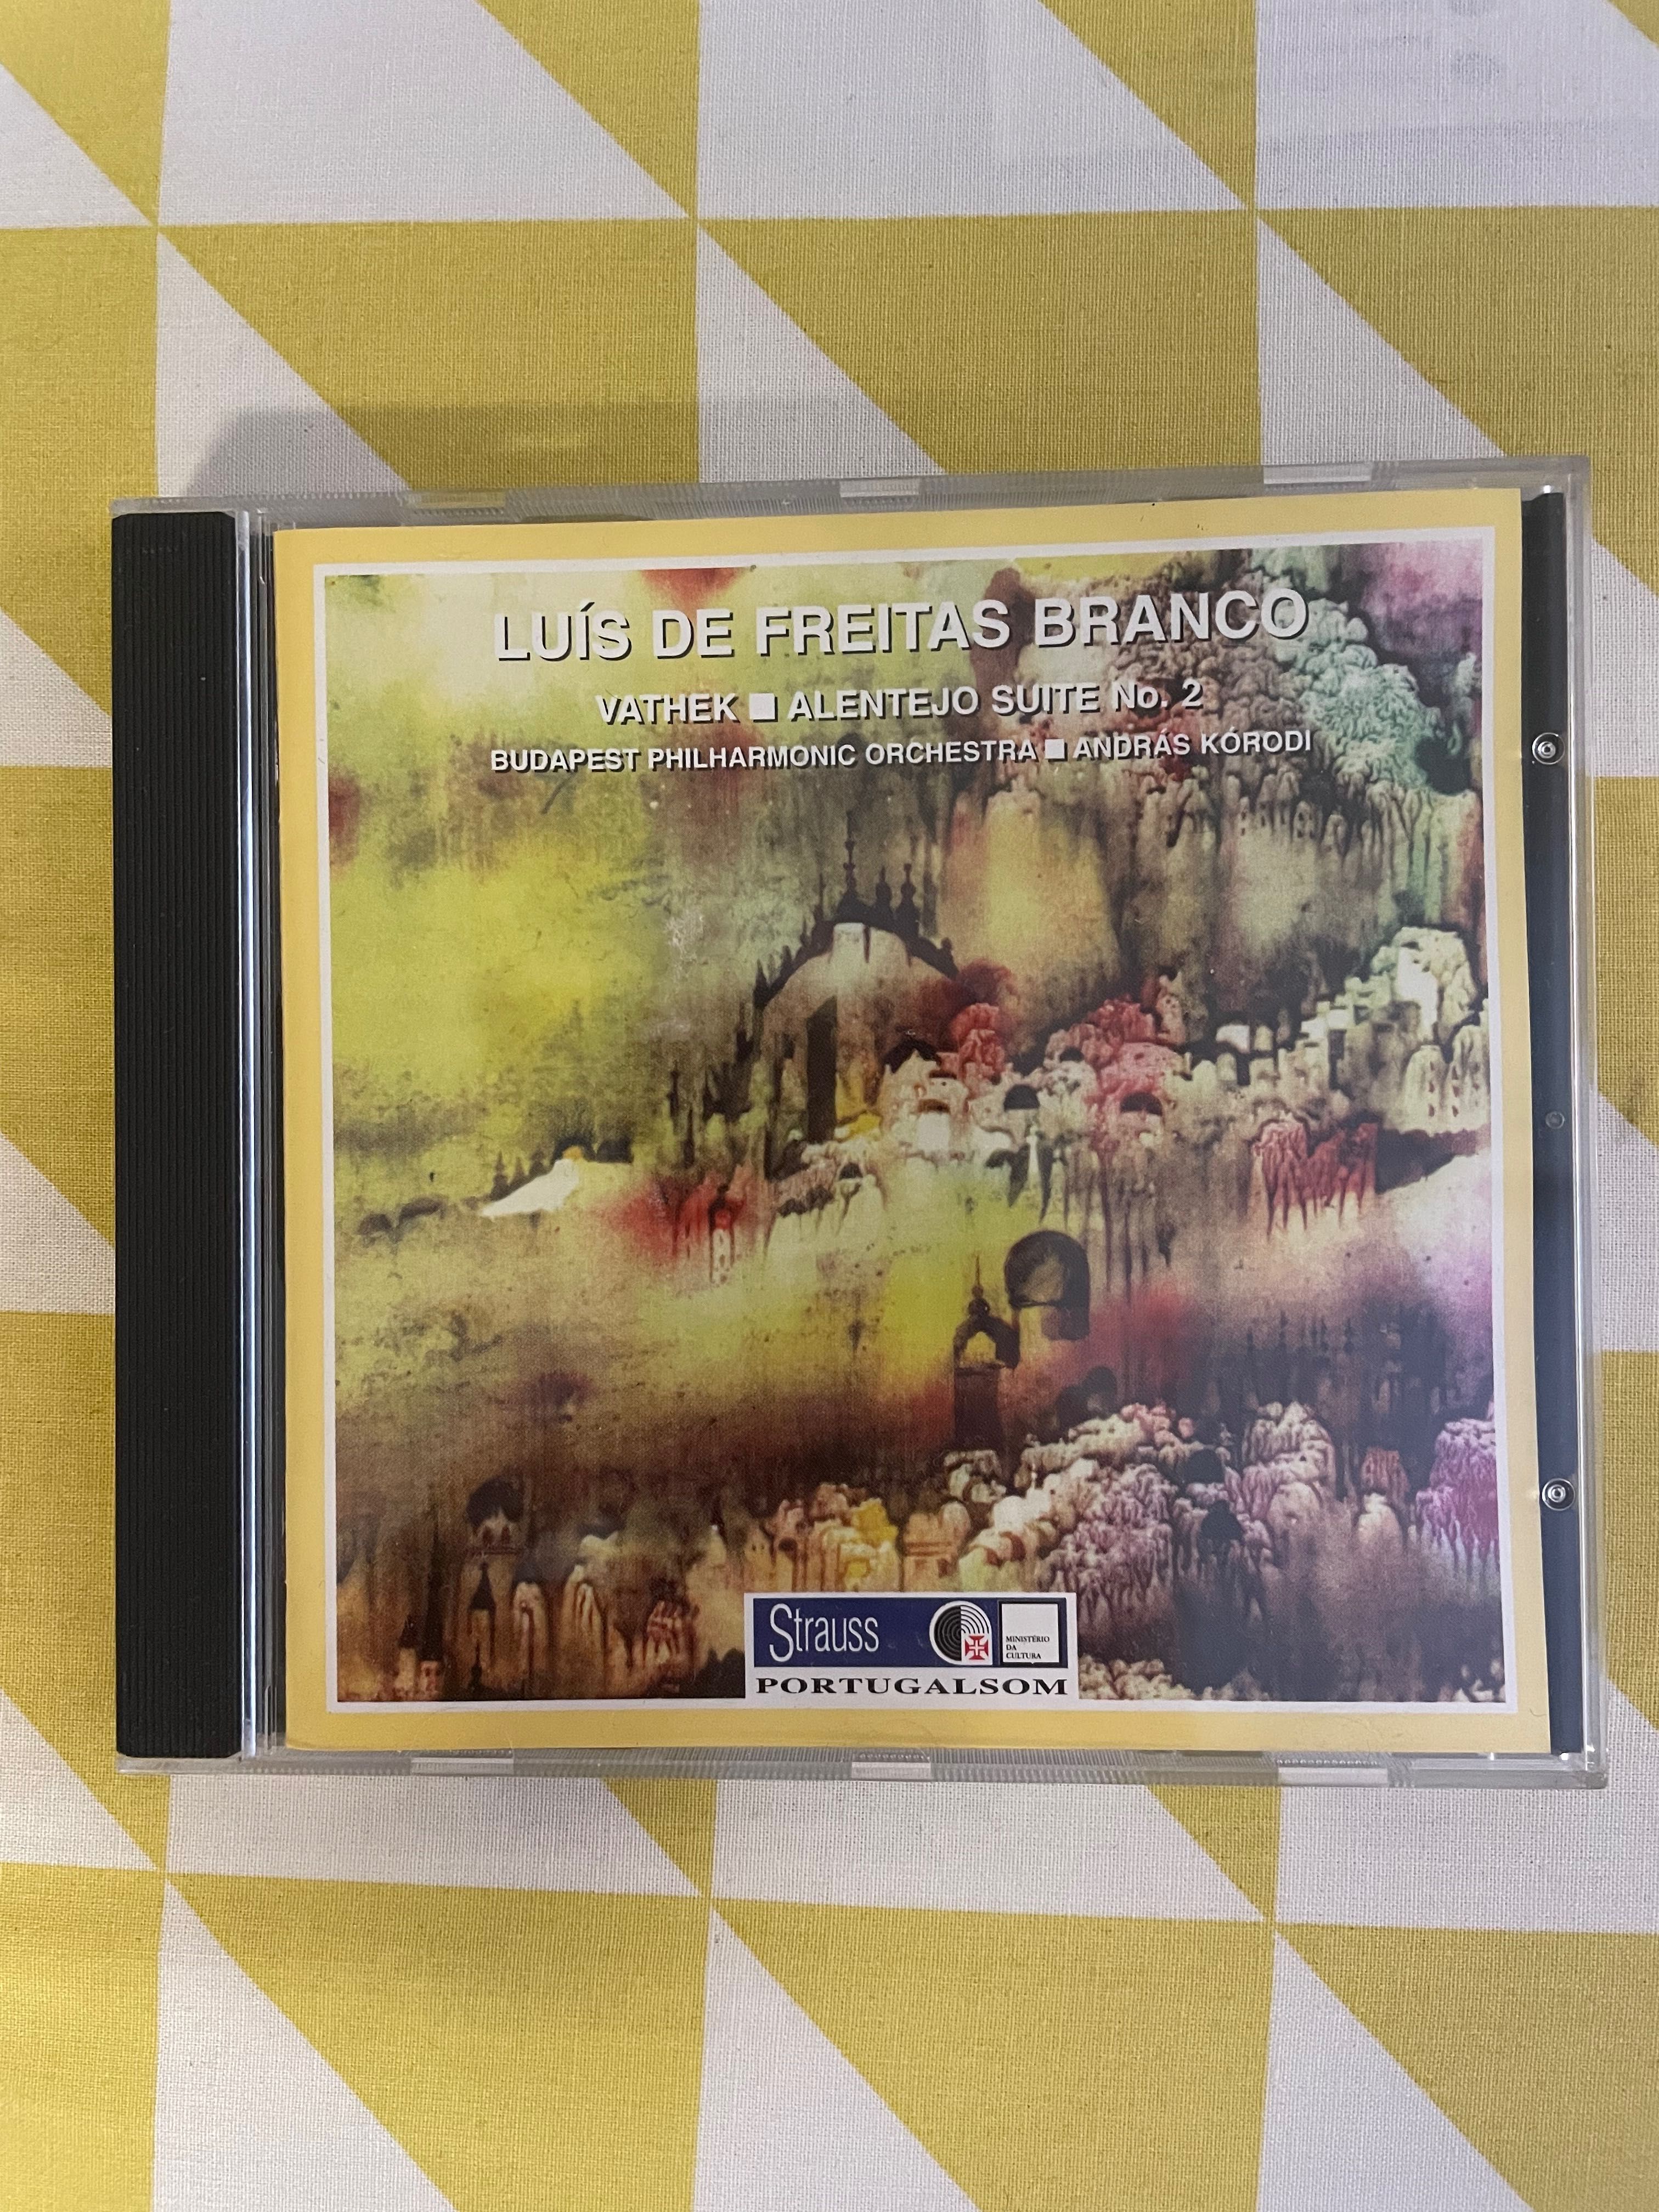 CD Vahtek e Suite Alentejana n2, Freitas Branco, PortugalSom